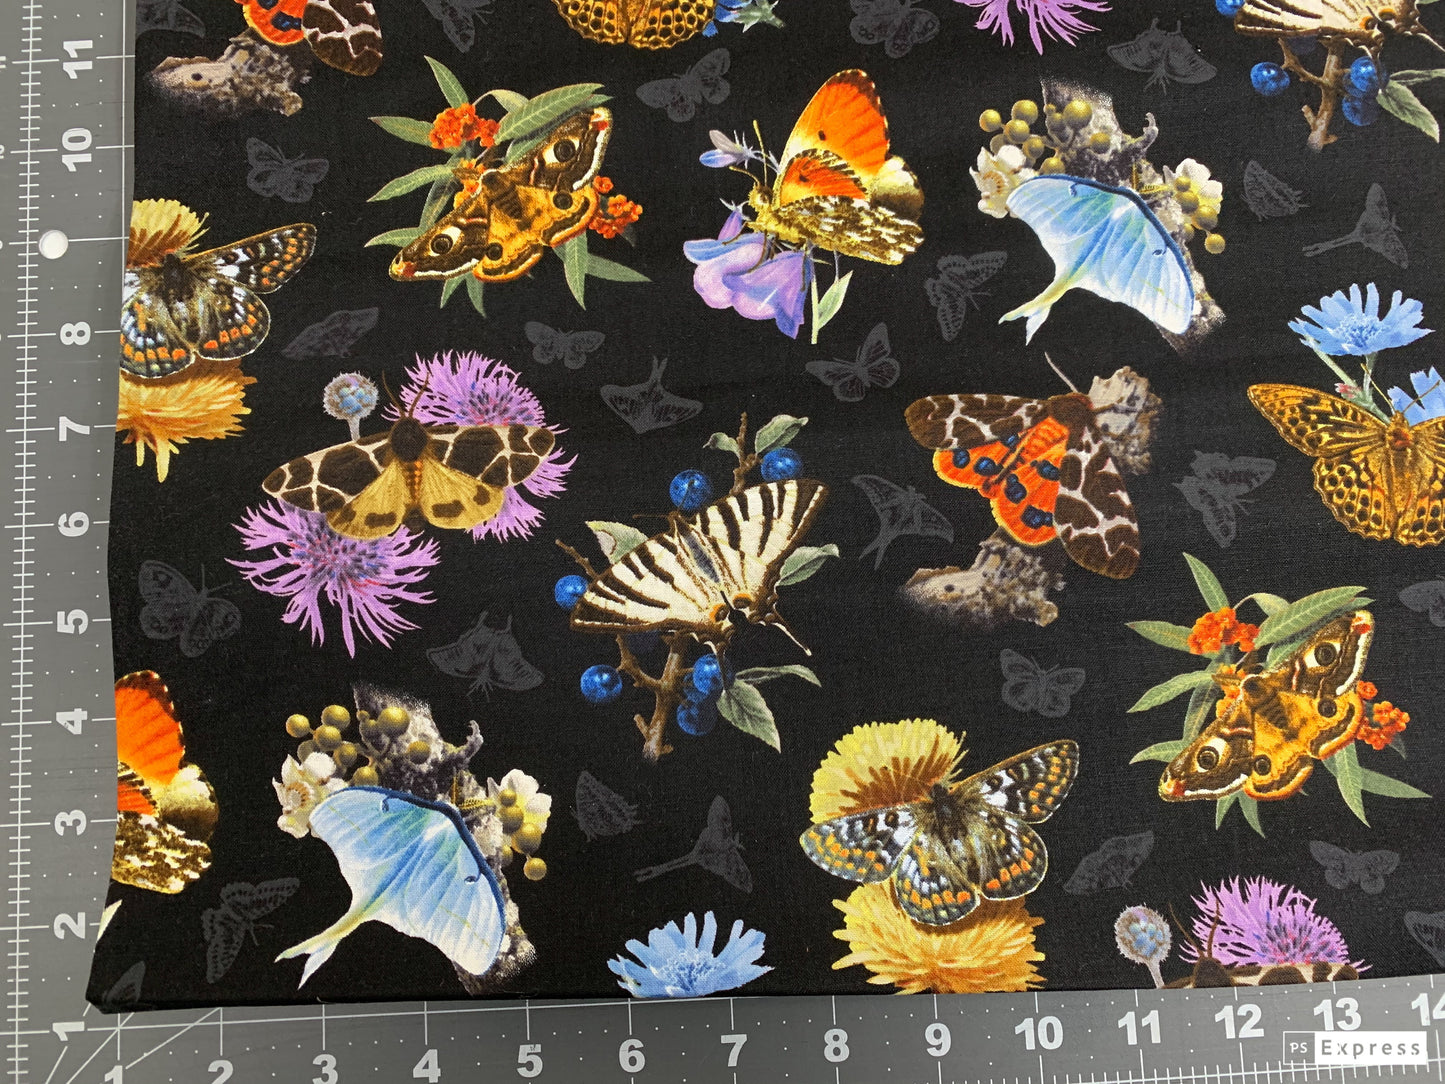 Black Moths and Butterflies fabric 9801 Beautiful Butterfly